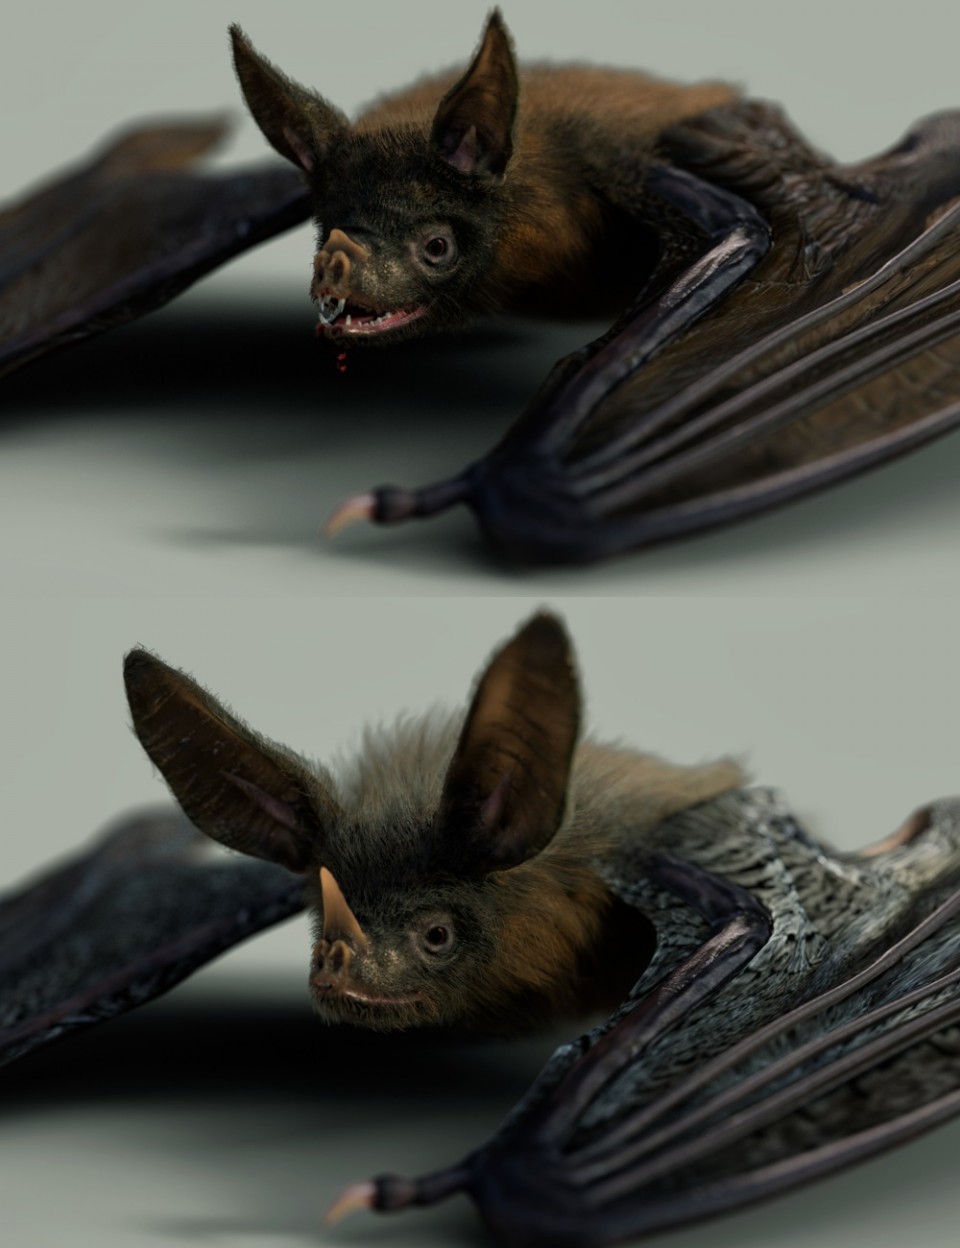 Vampire Bat by AM